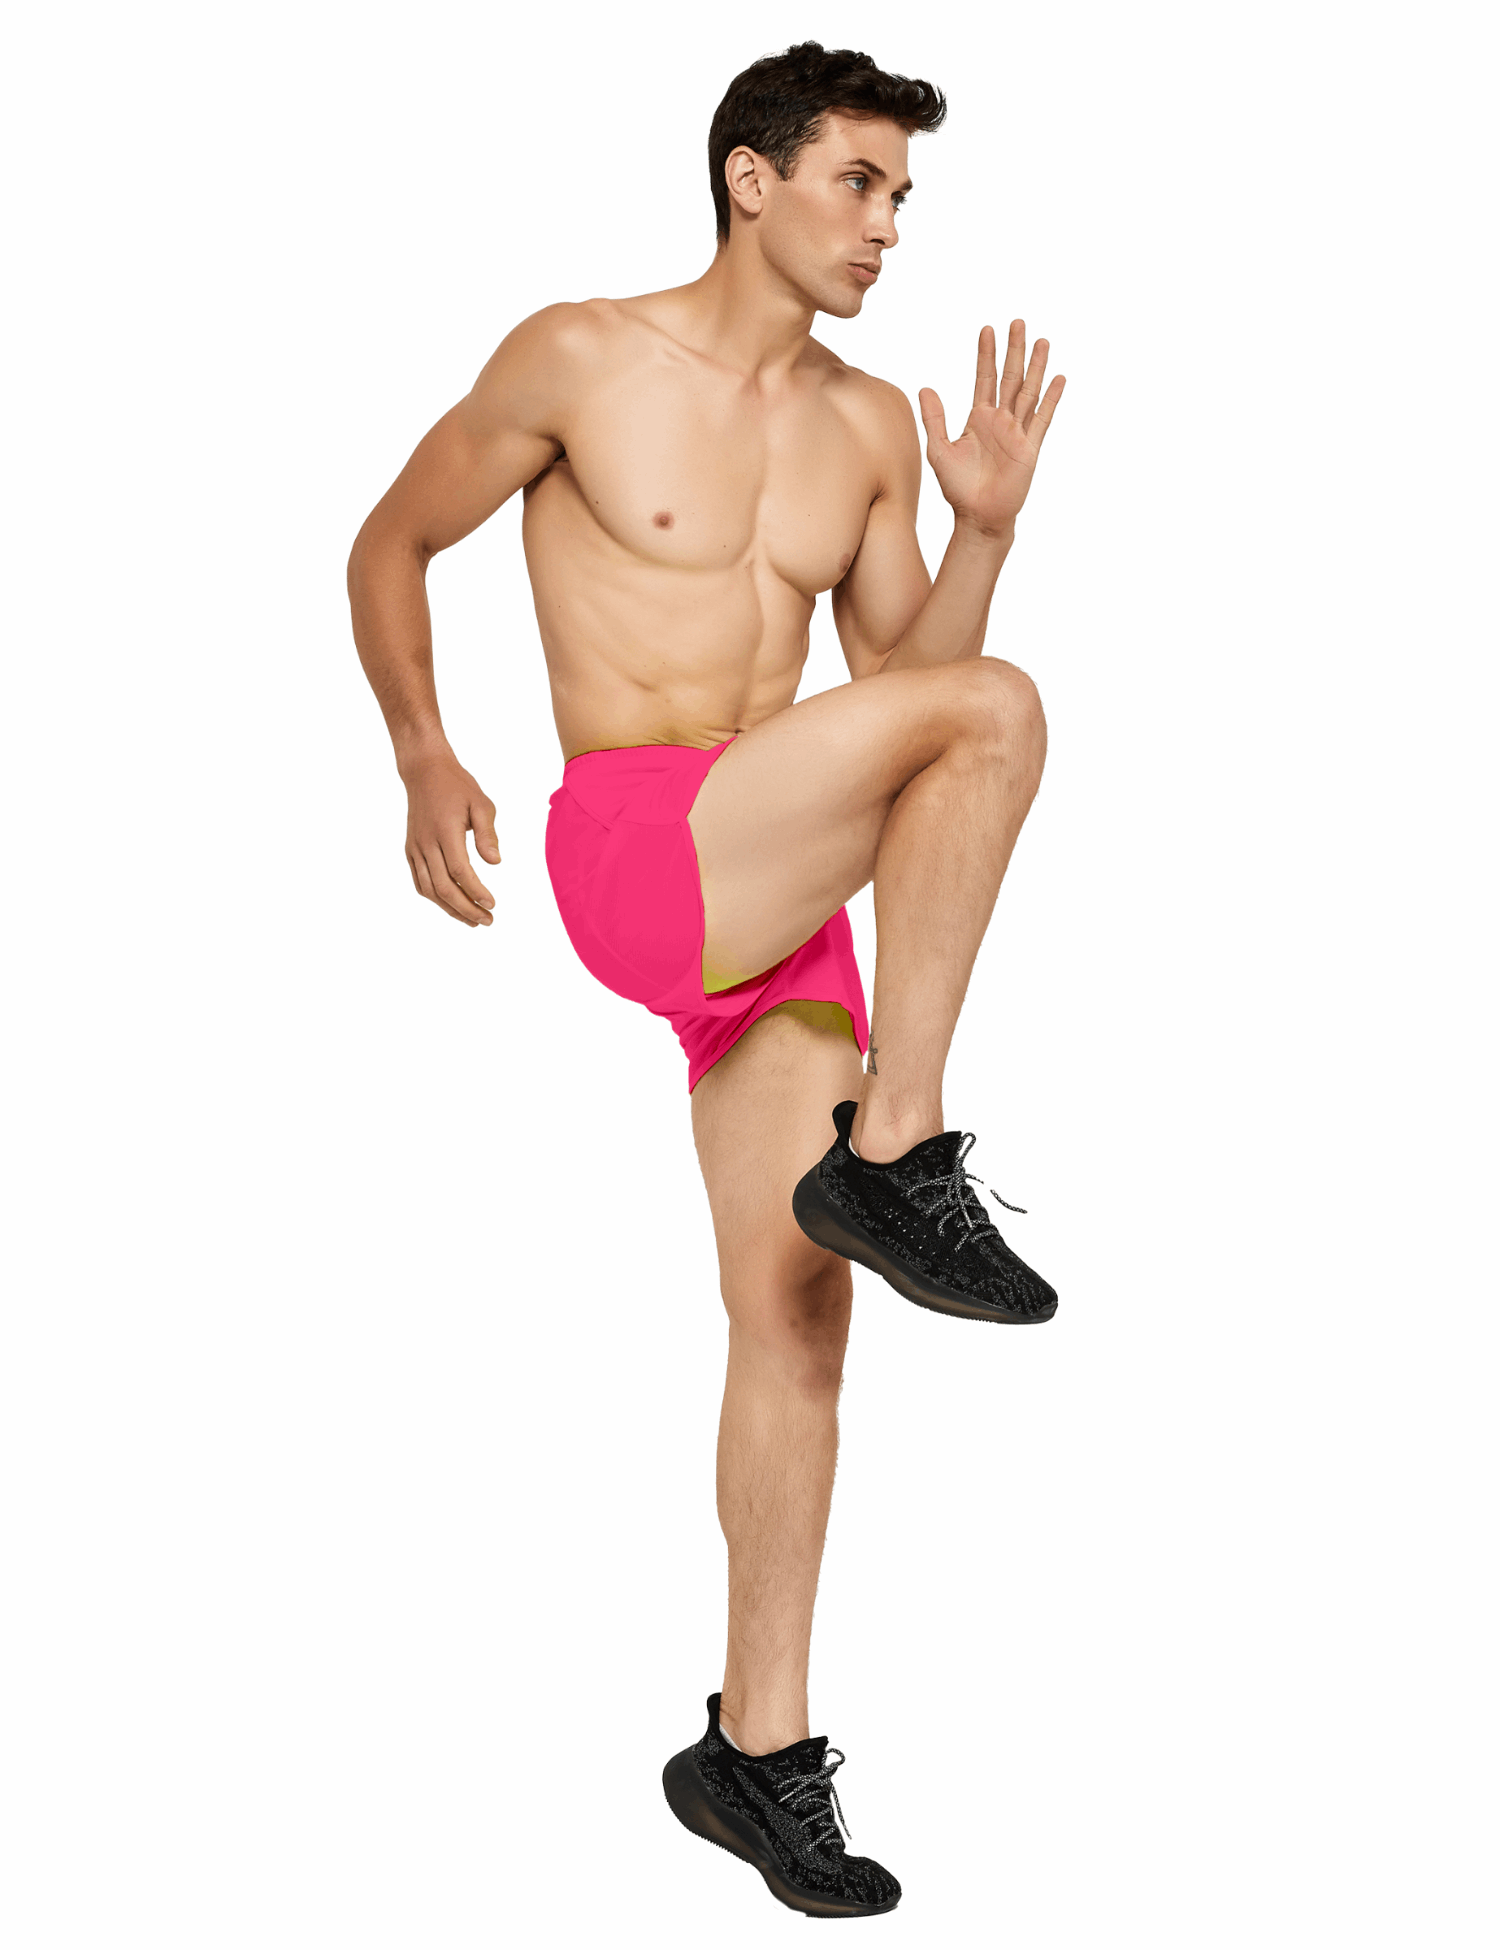 mens 3 inch neon pink running shorts